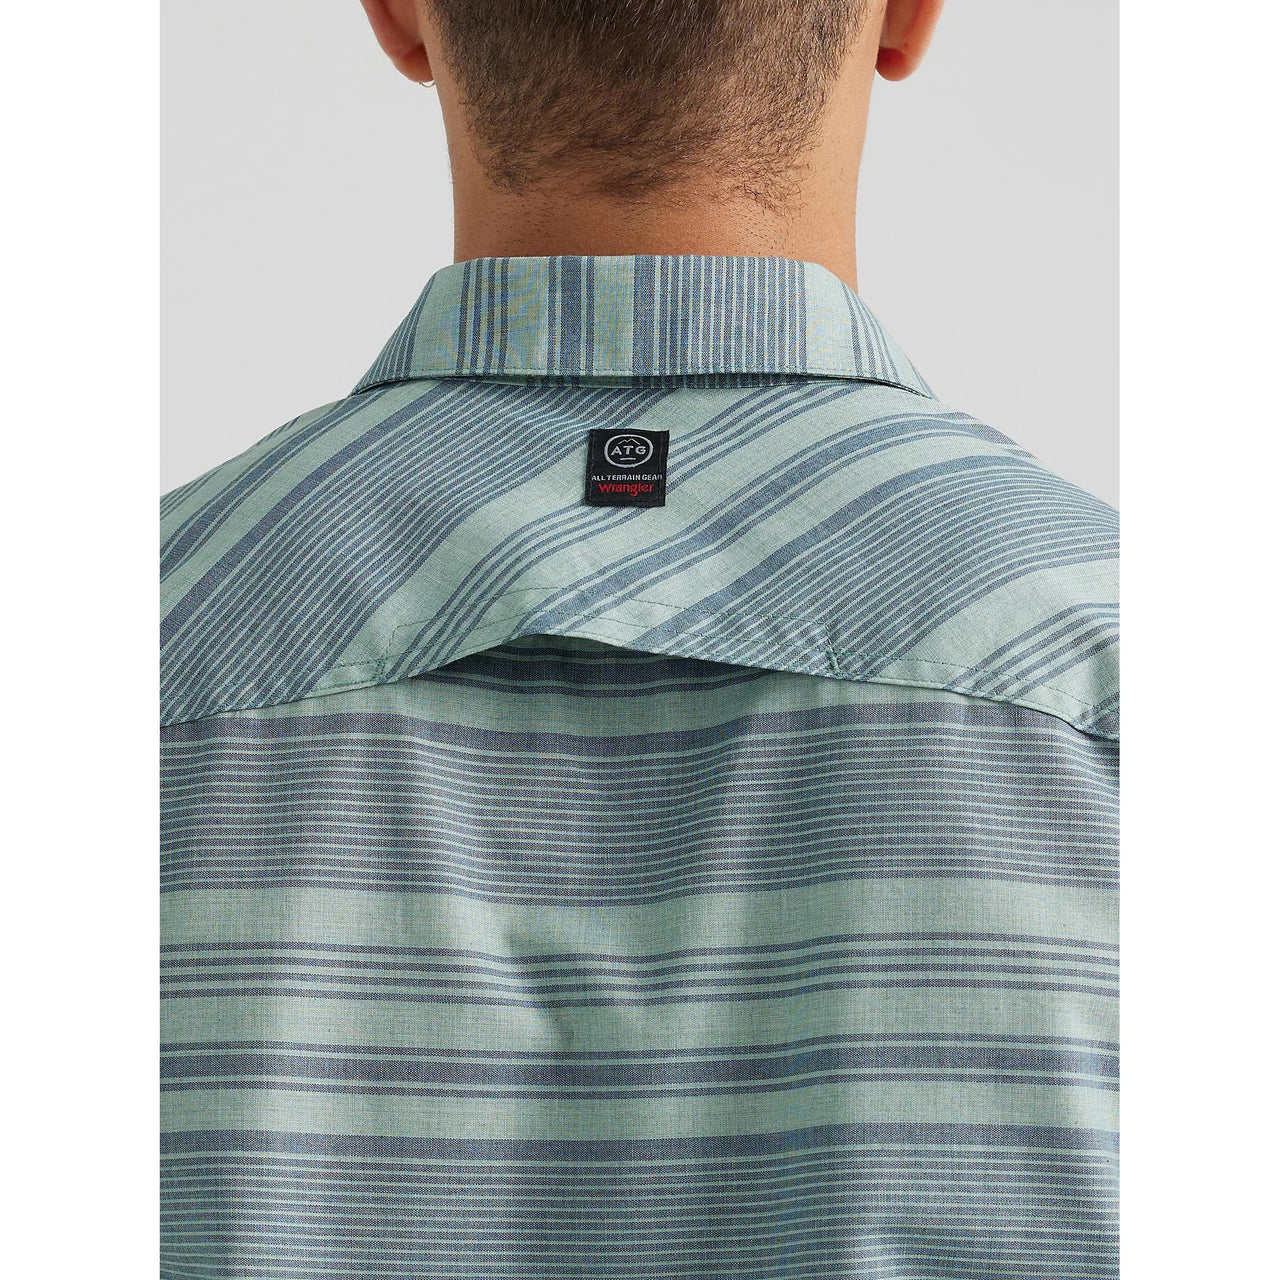 Wrangler Men's ATG Short Sleeve Breeze Shirt - Fade Blue